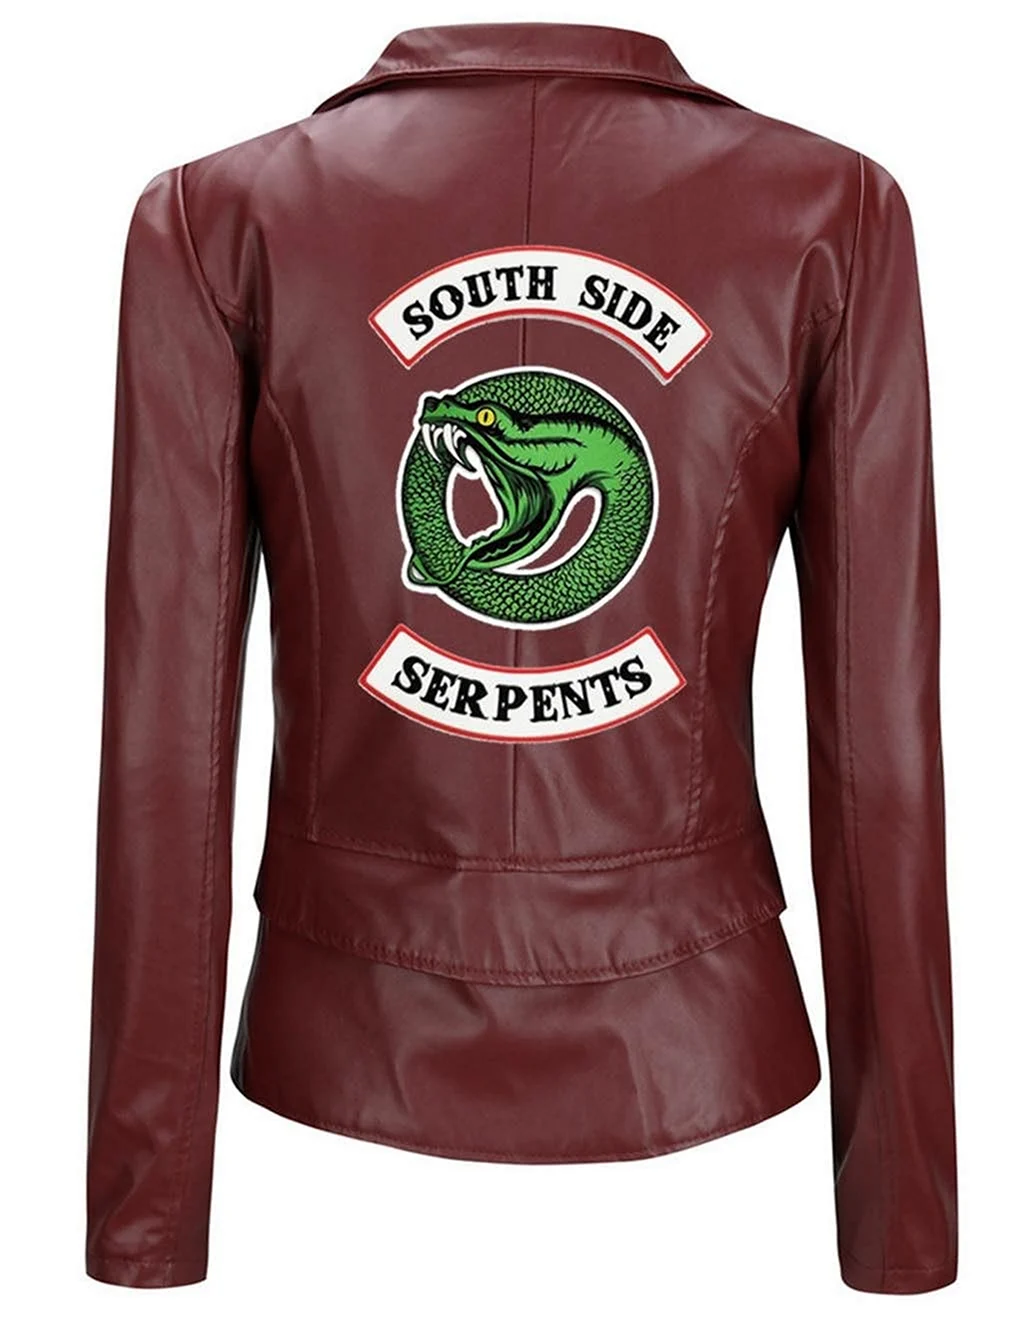 South Side Serpents куртка женская